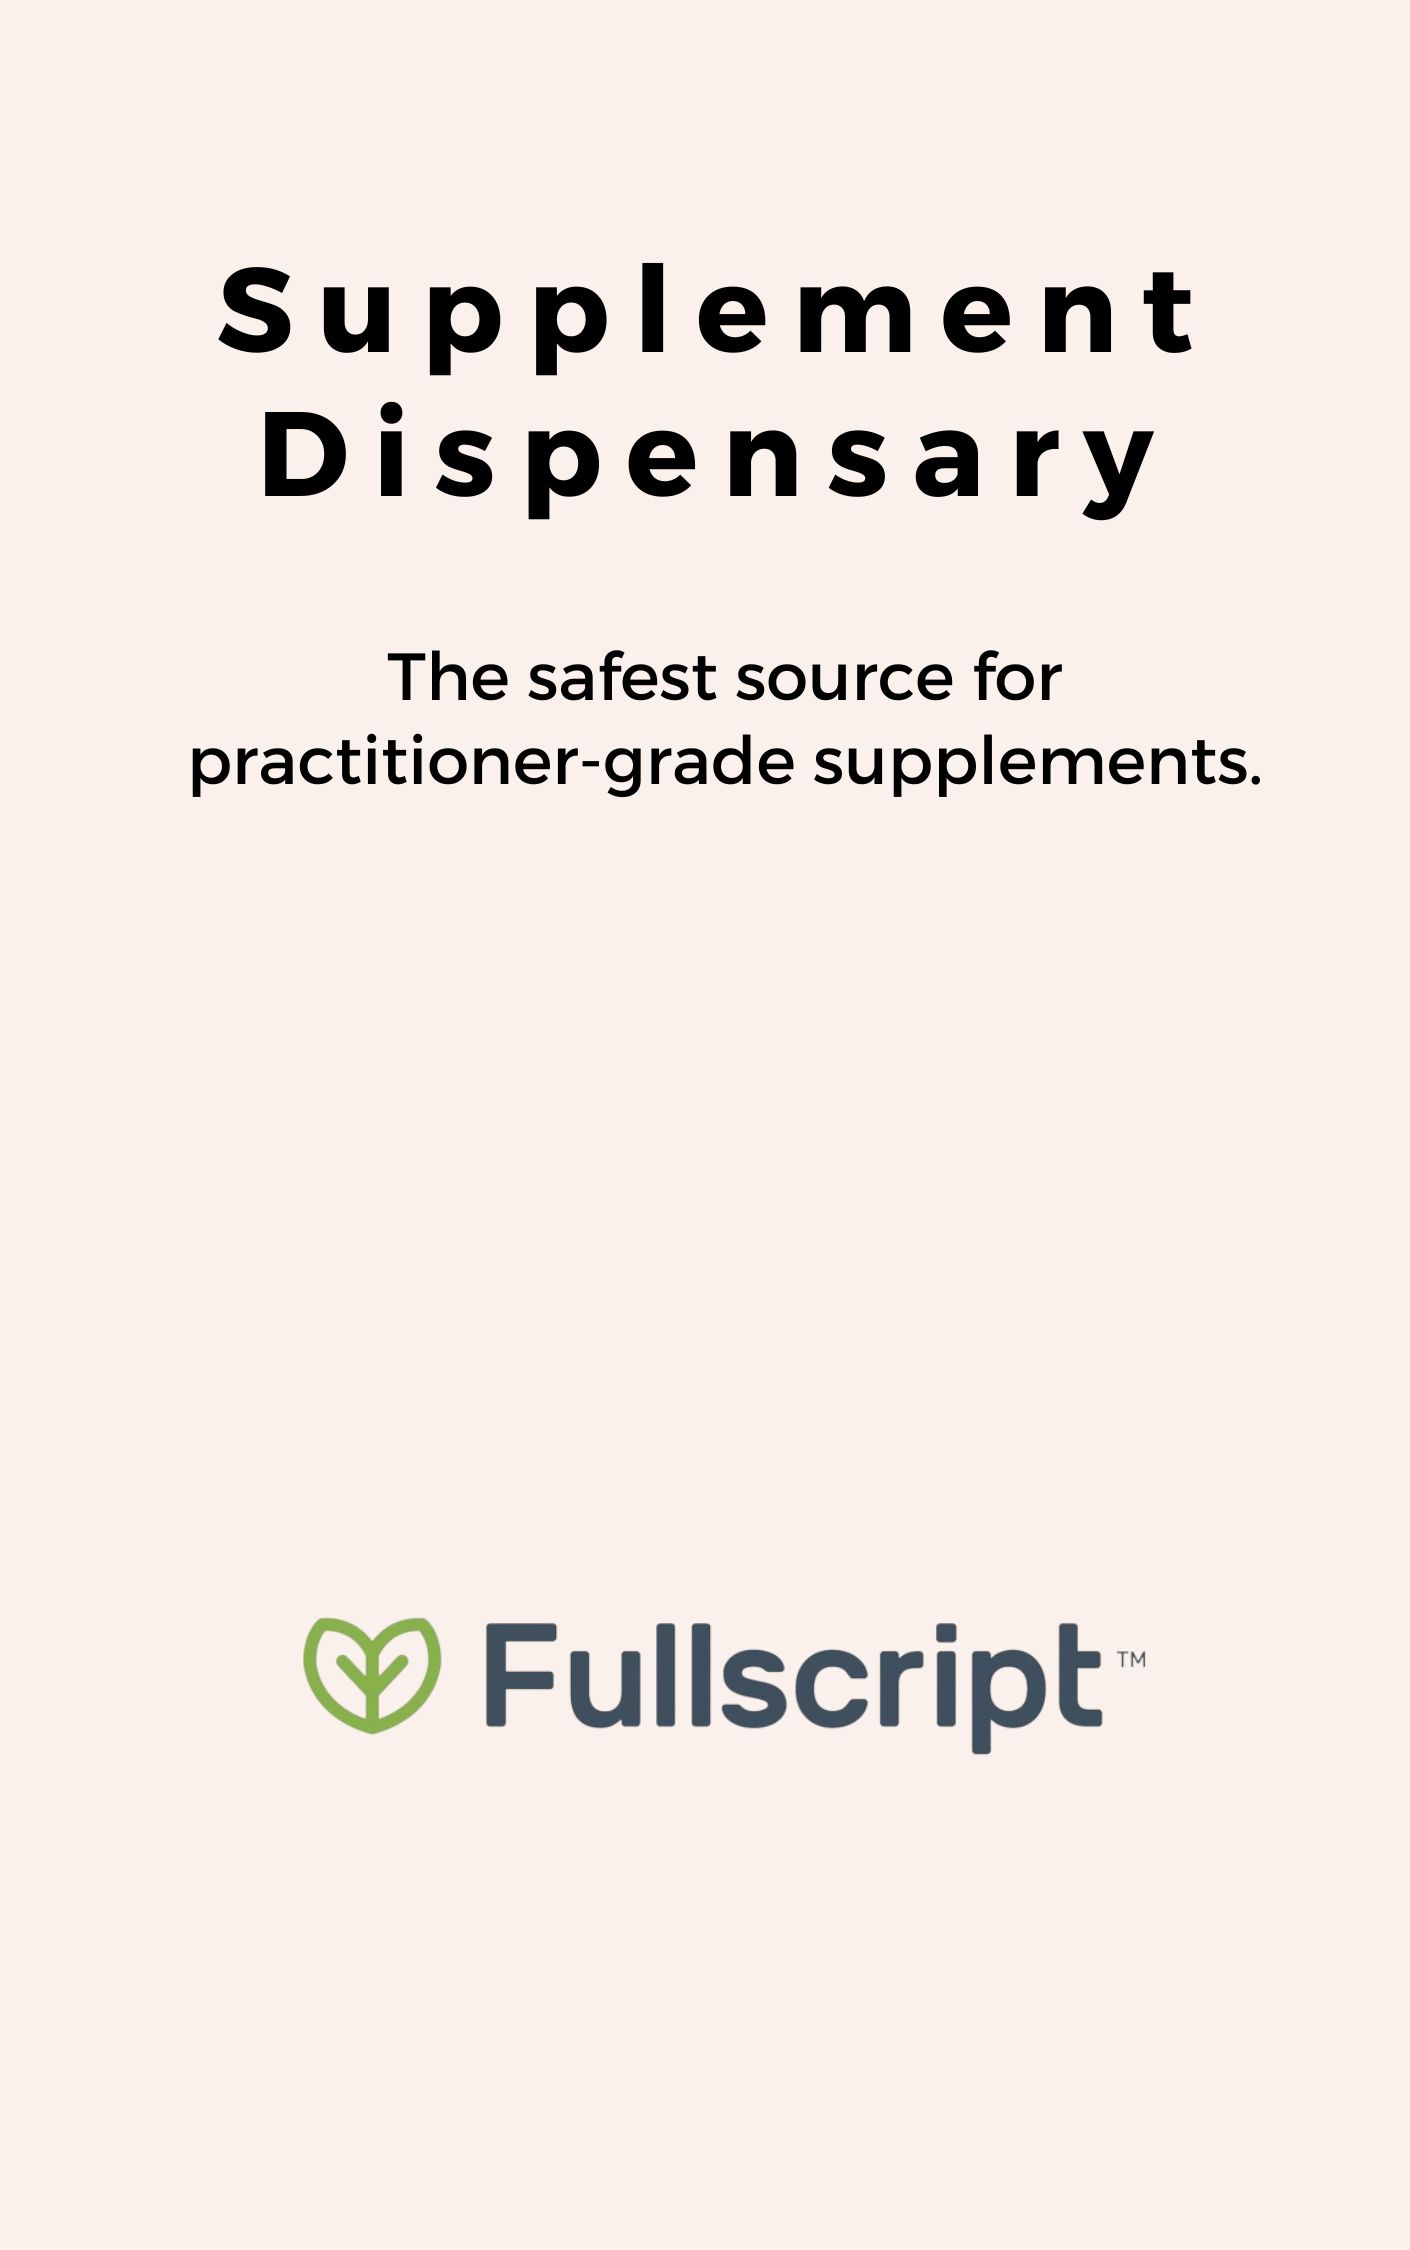 Supplement Dispensary with Fullscript